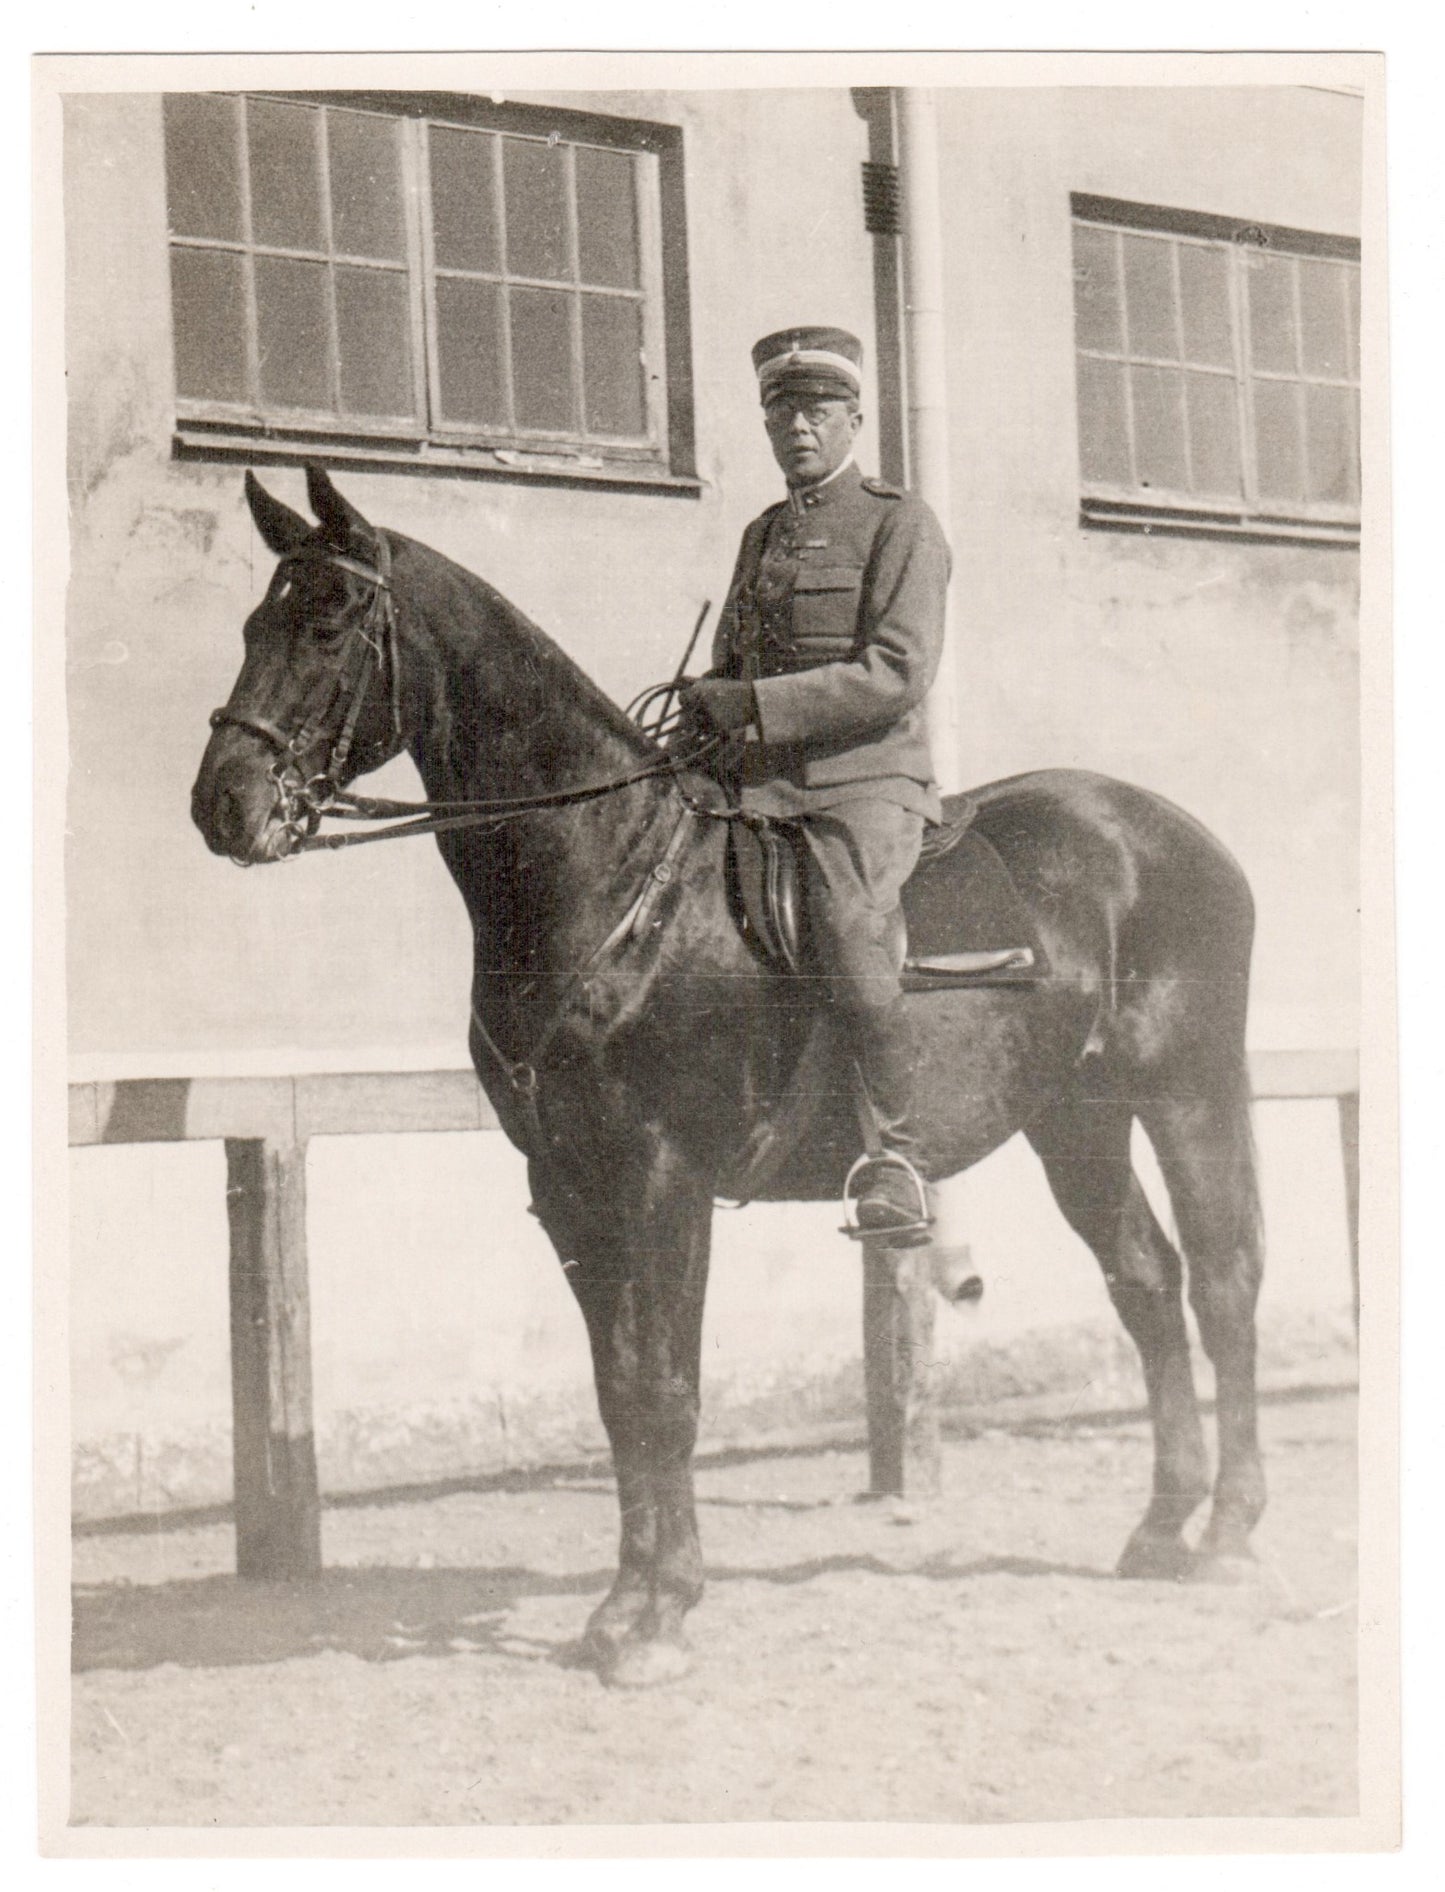 Vintage Military Photography - Swedish Solider - Officer on Horse - Sweden